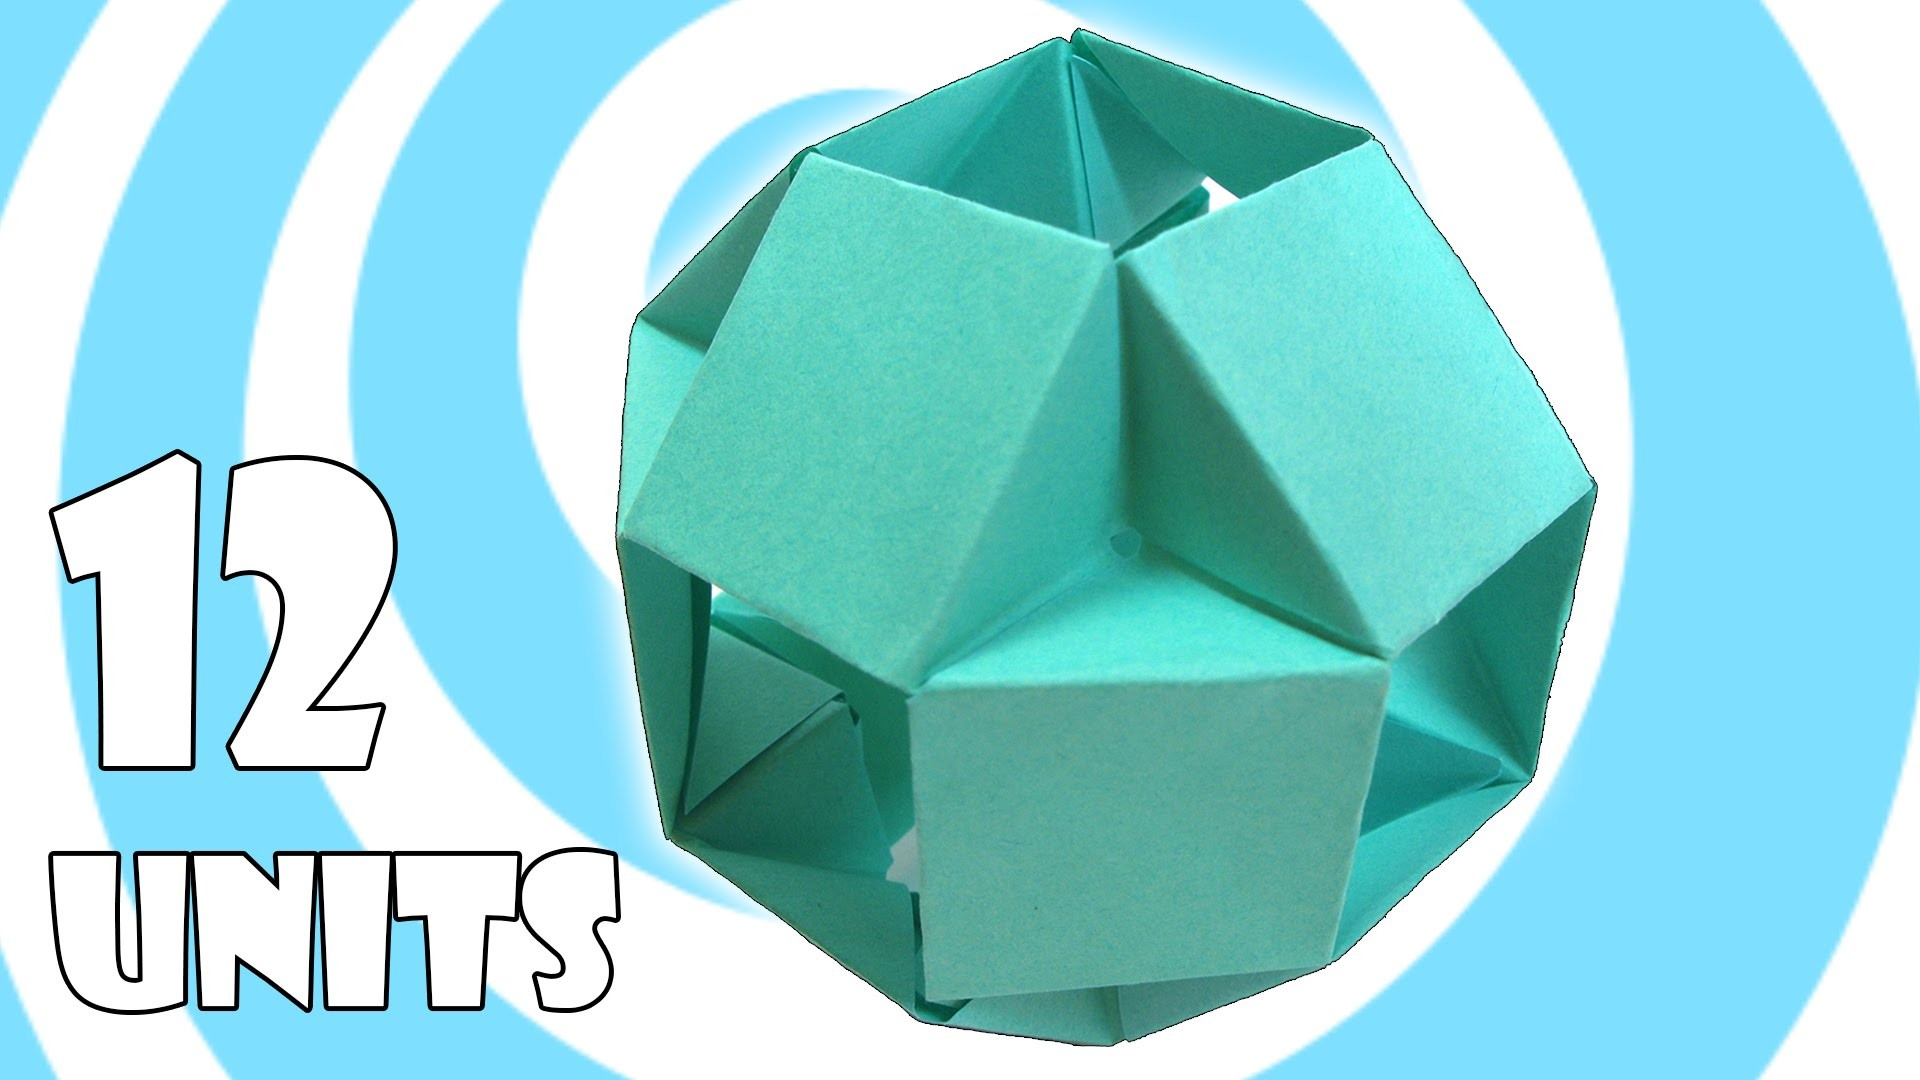 Tomoko Fuse Origami Instructions Modular Origami Ball Tutorial 12 Units Tomoko Fuse